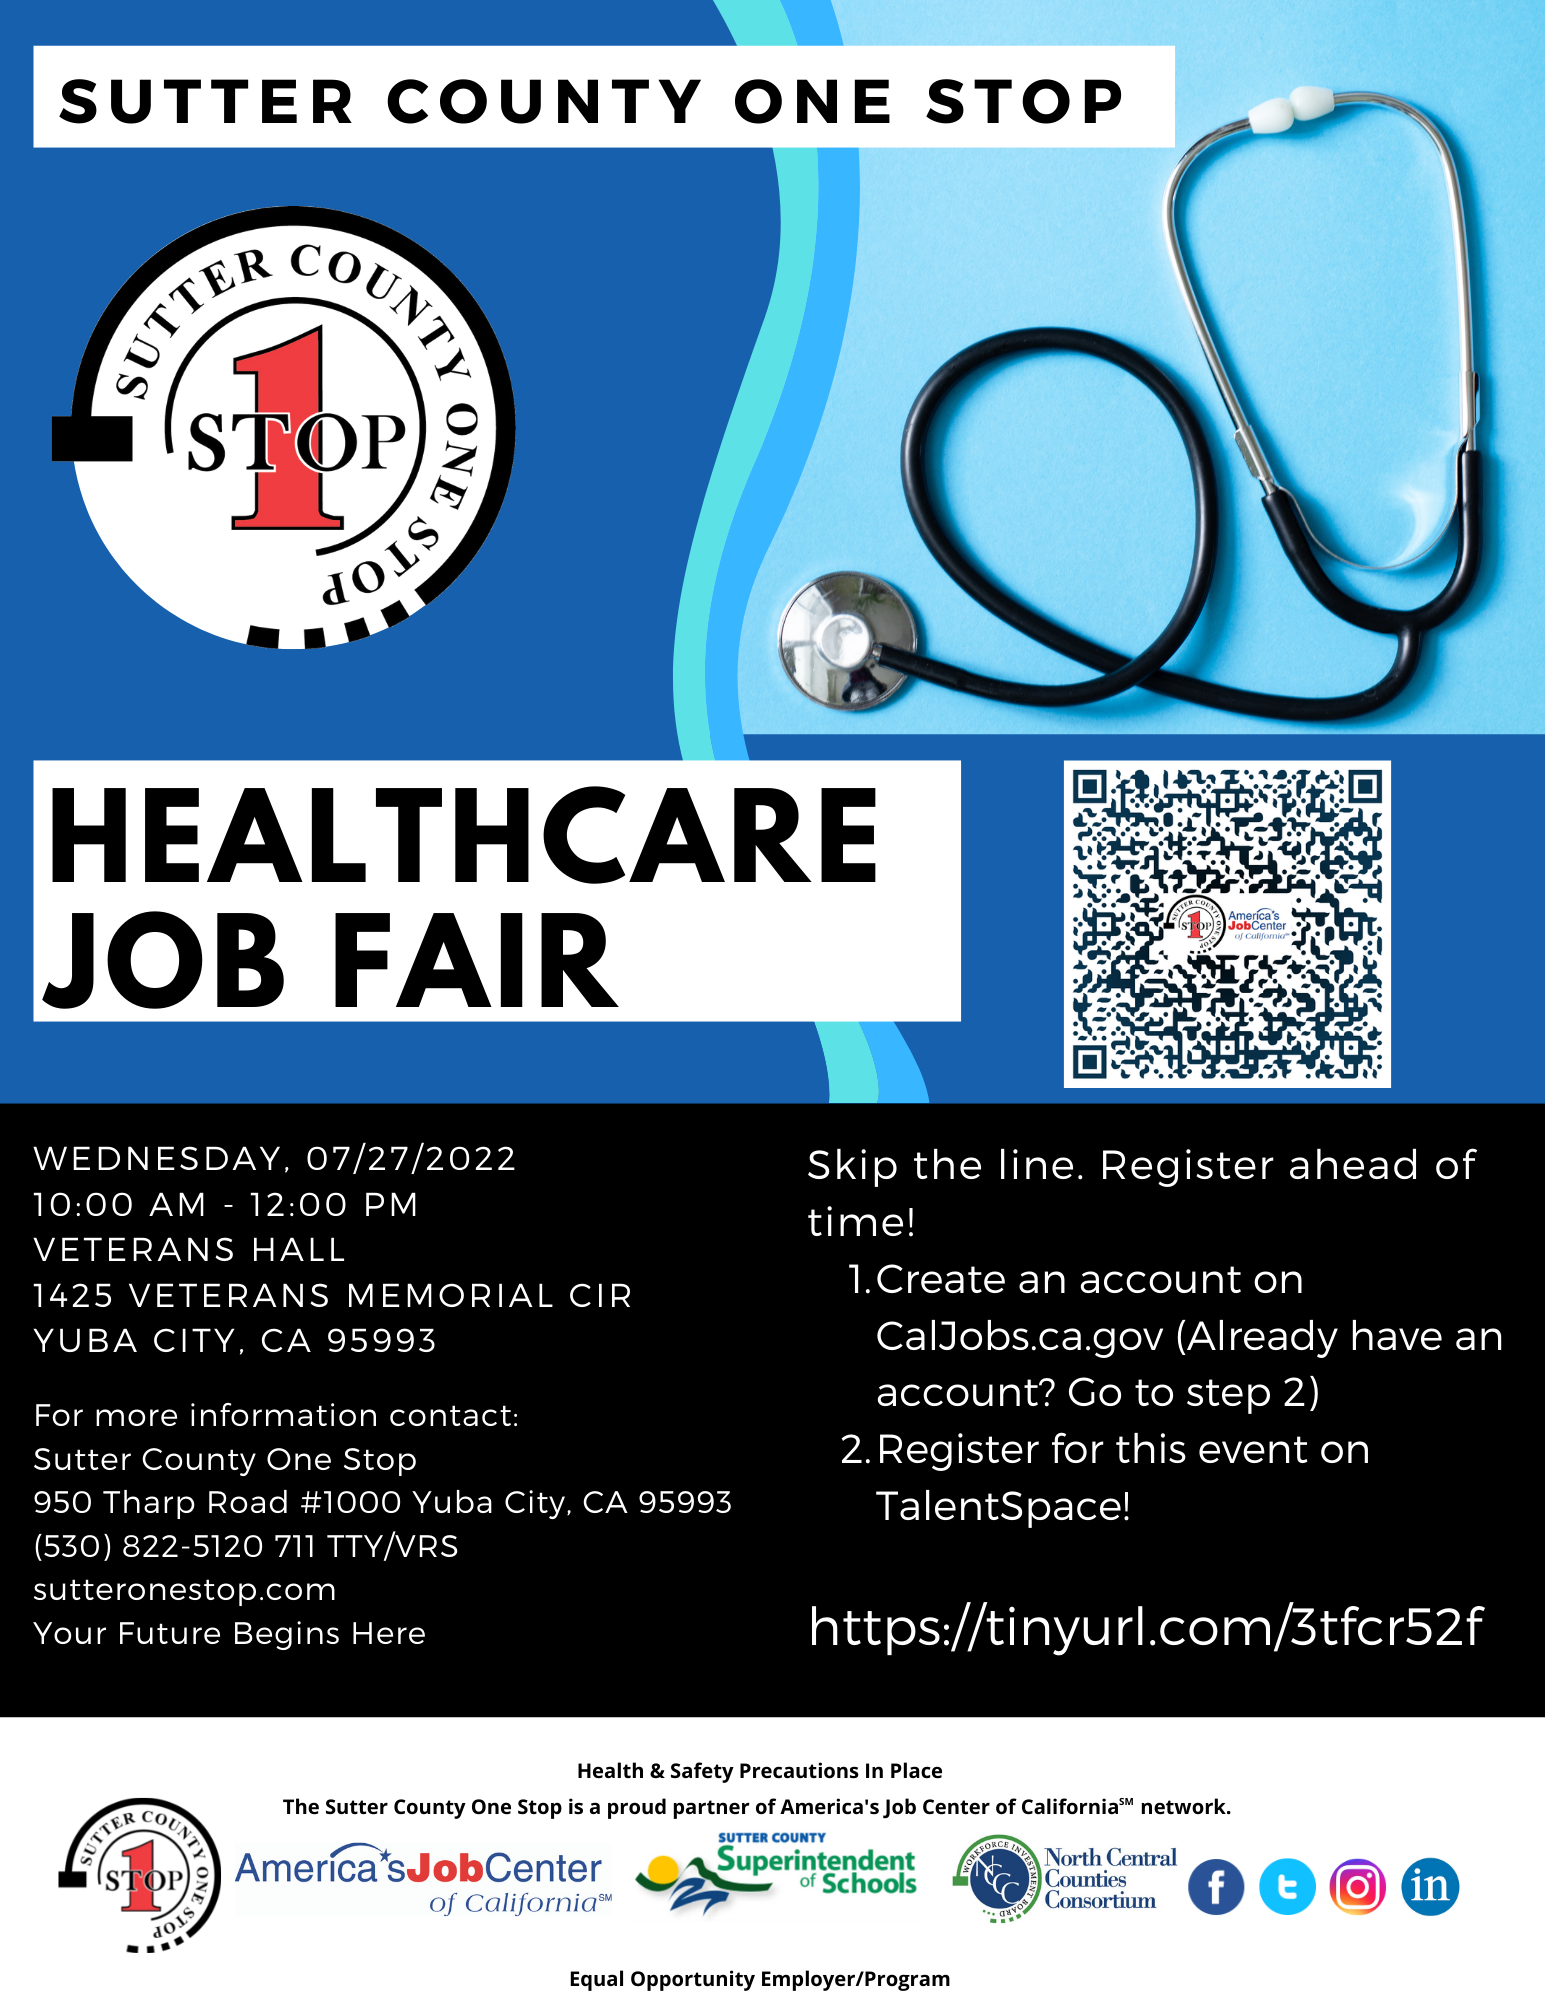 Sutter County One Stop Healthcare Job Fair 7/27/27